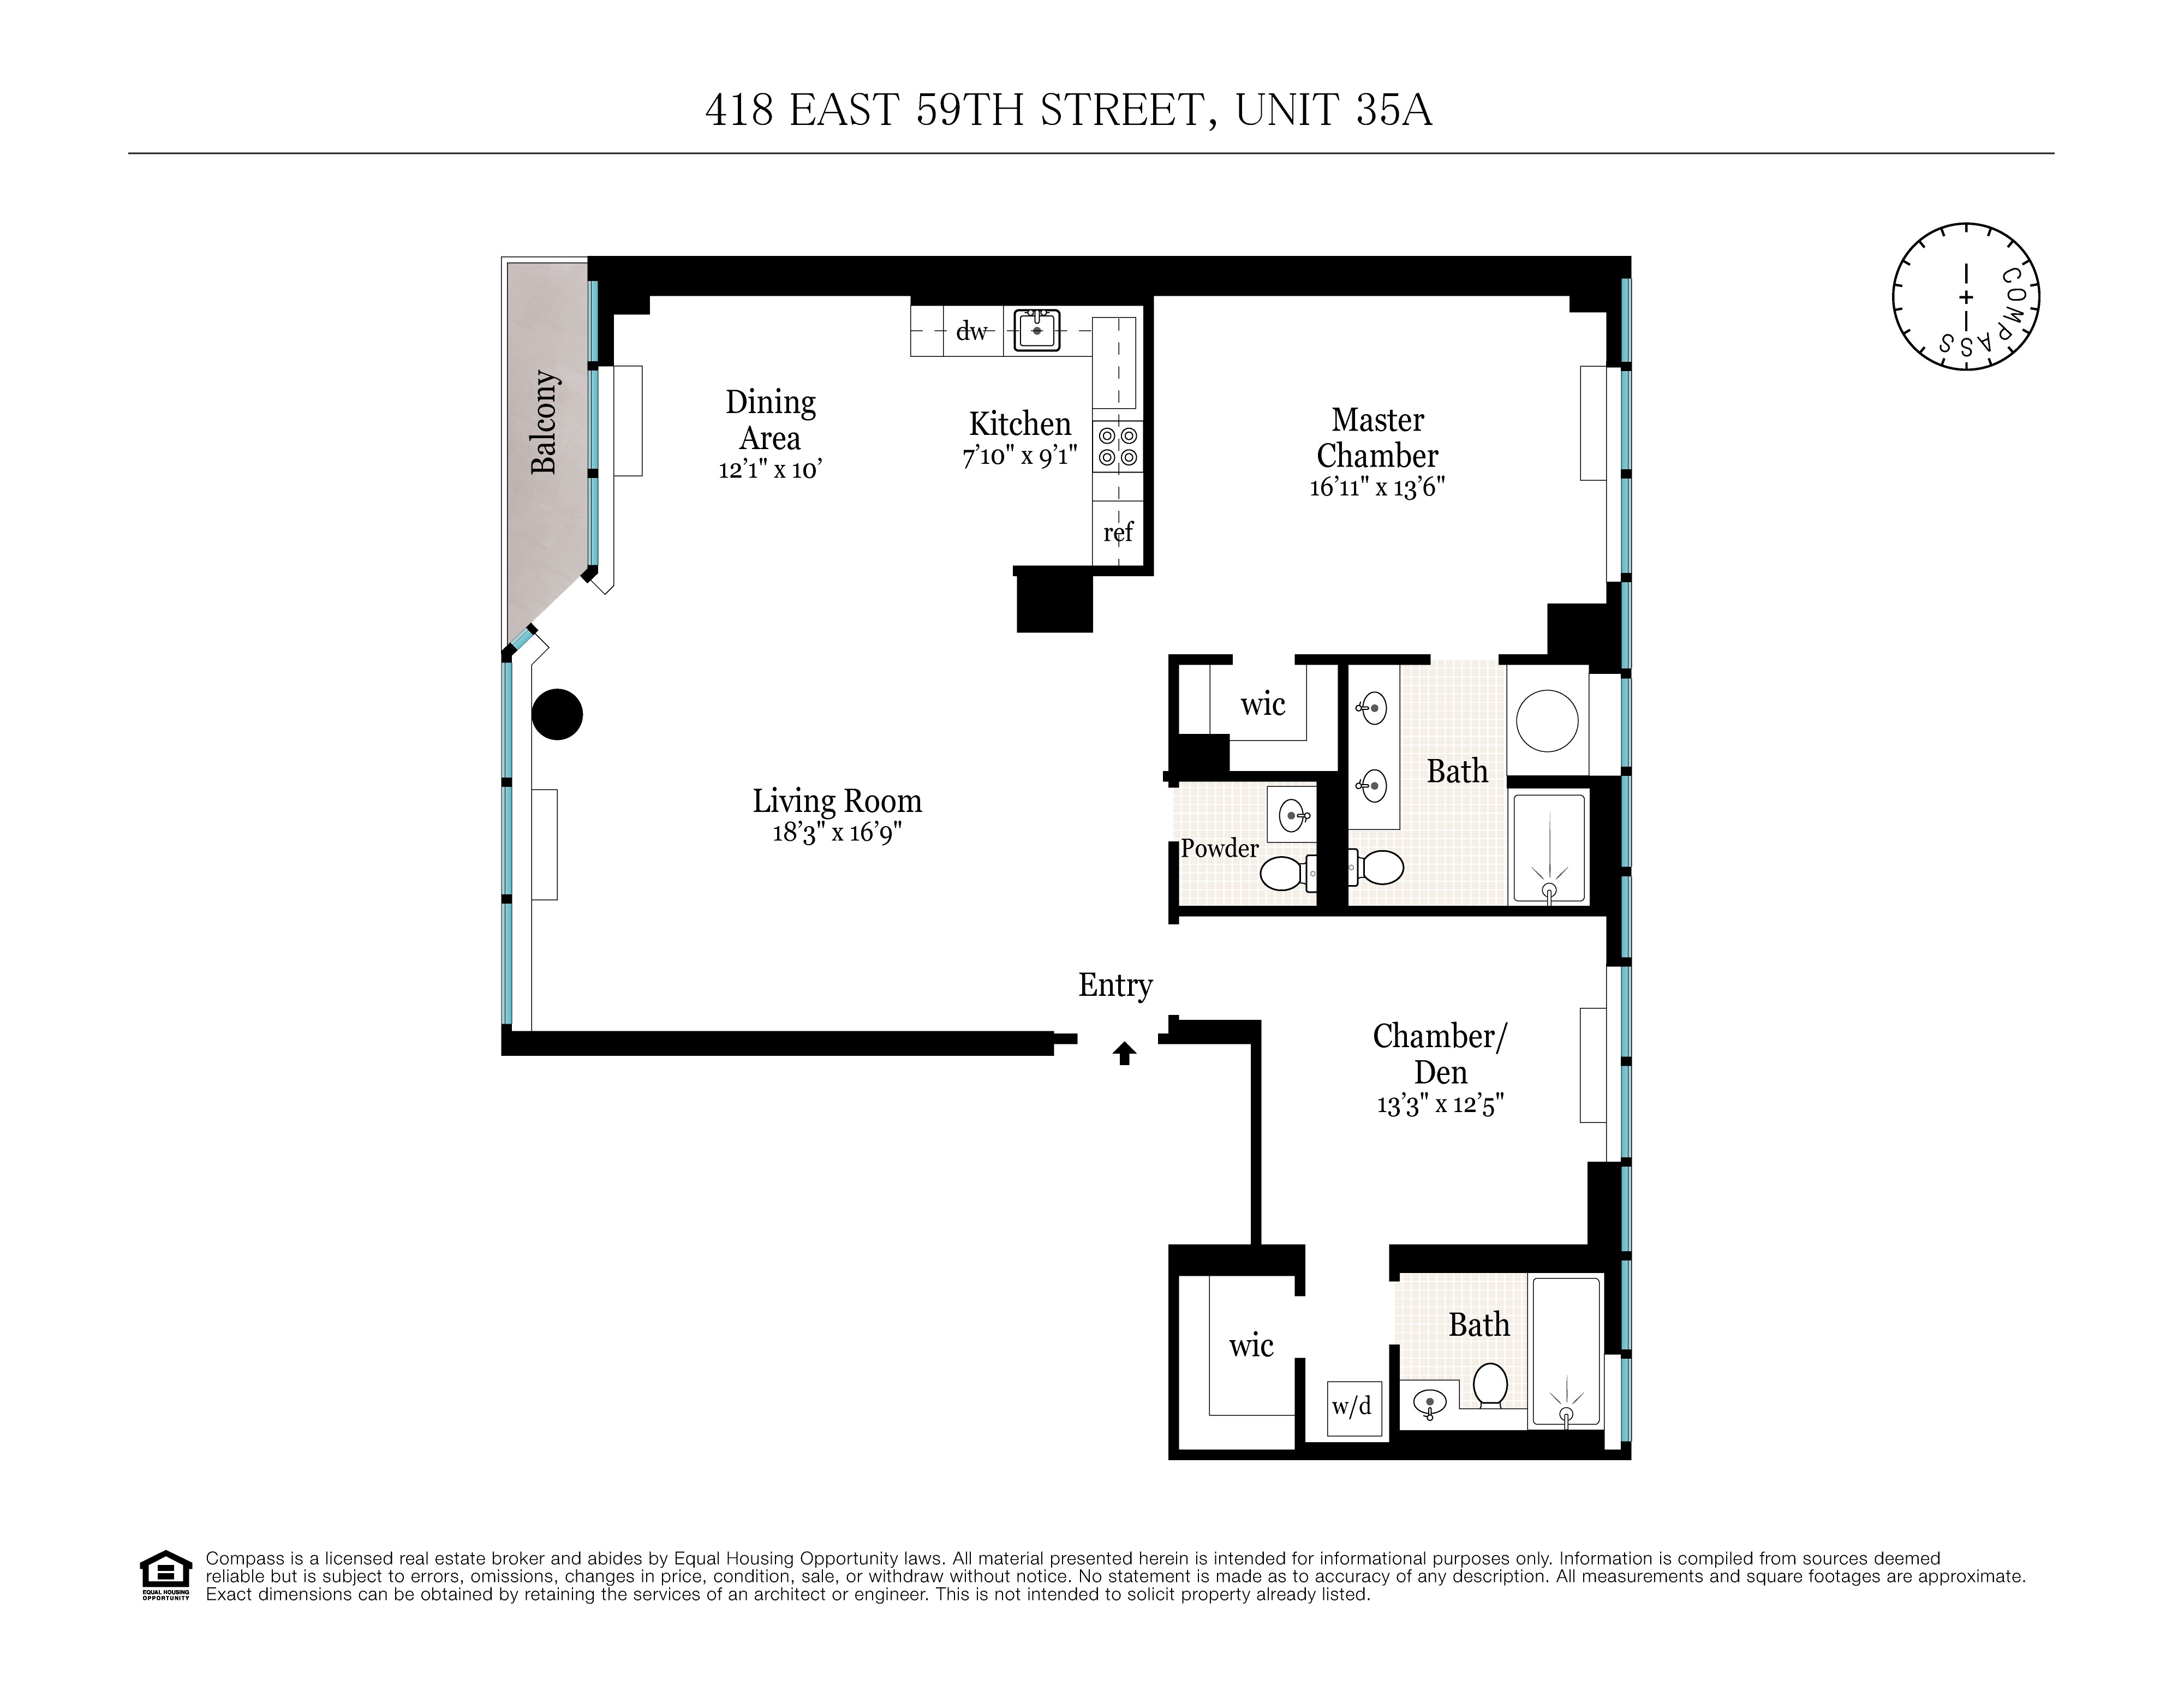 Floorplan for 418 East 59th Street, 35A